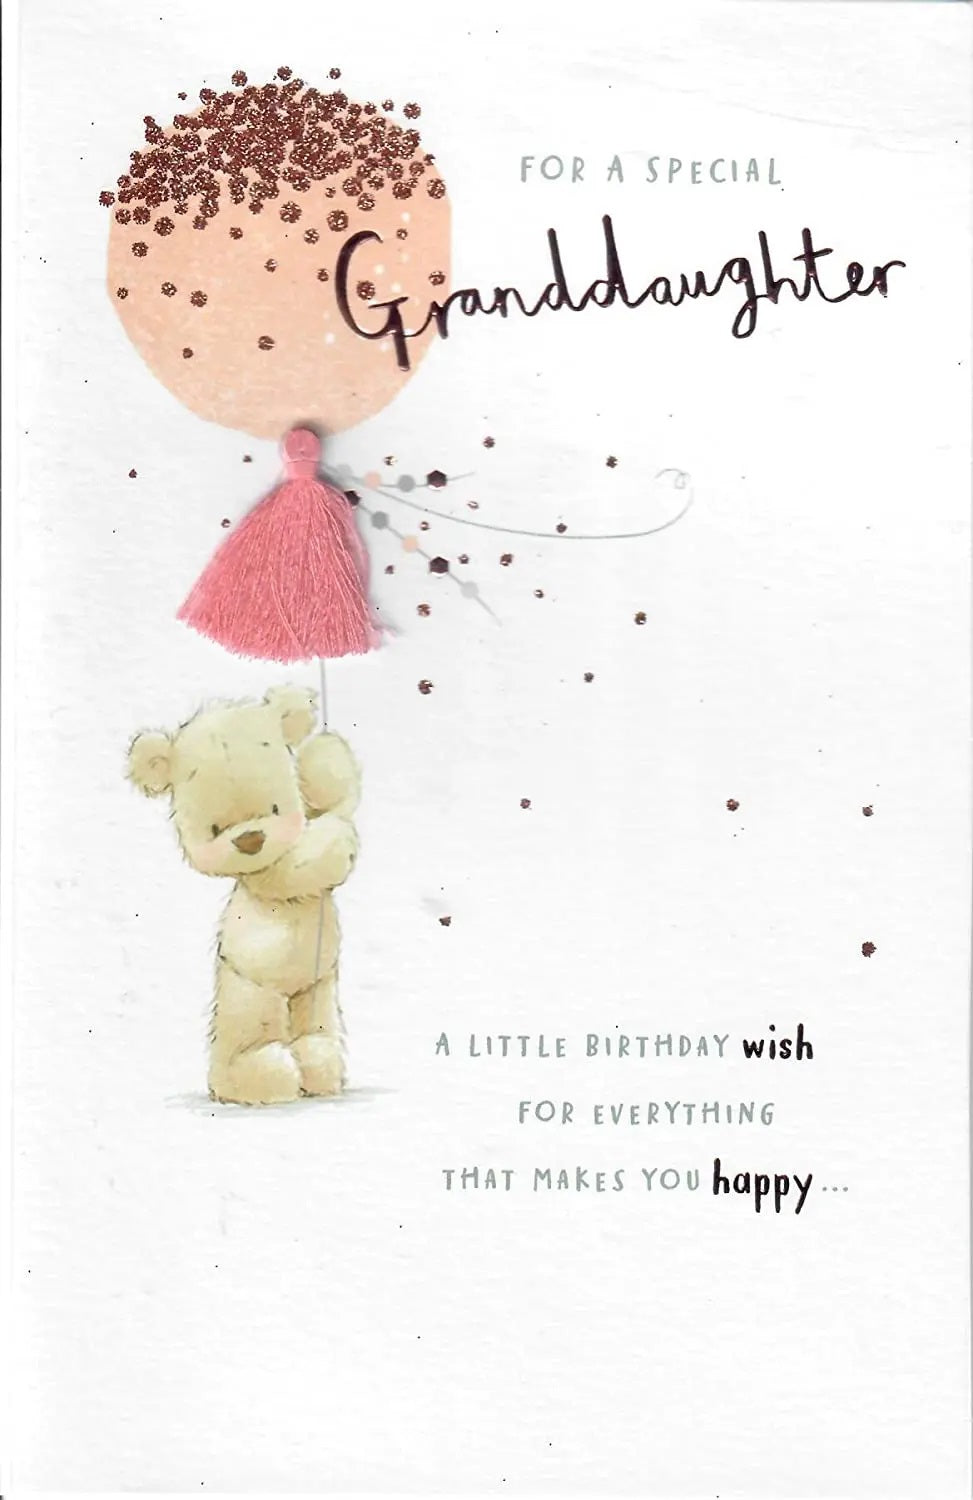 Granddaughter Birthday Card - Nutmeg Bear Holding a Balloon